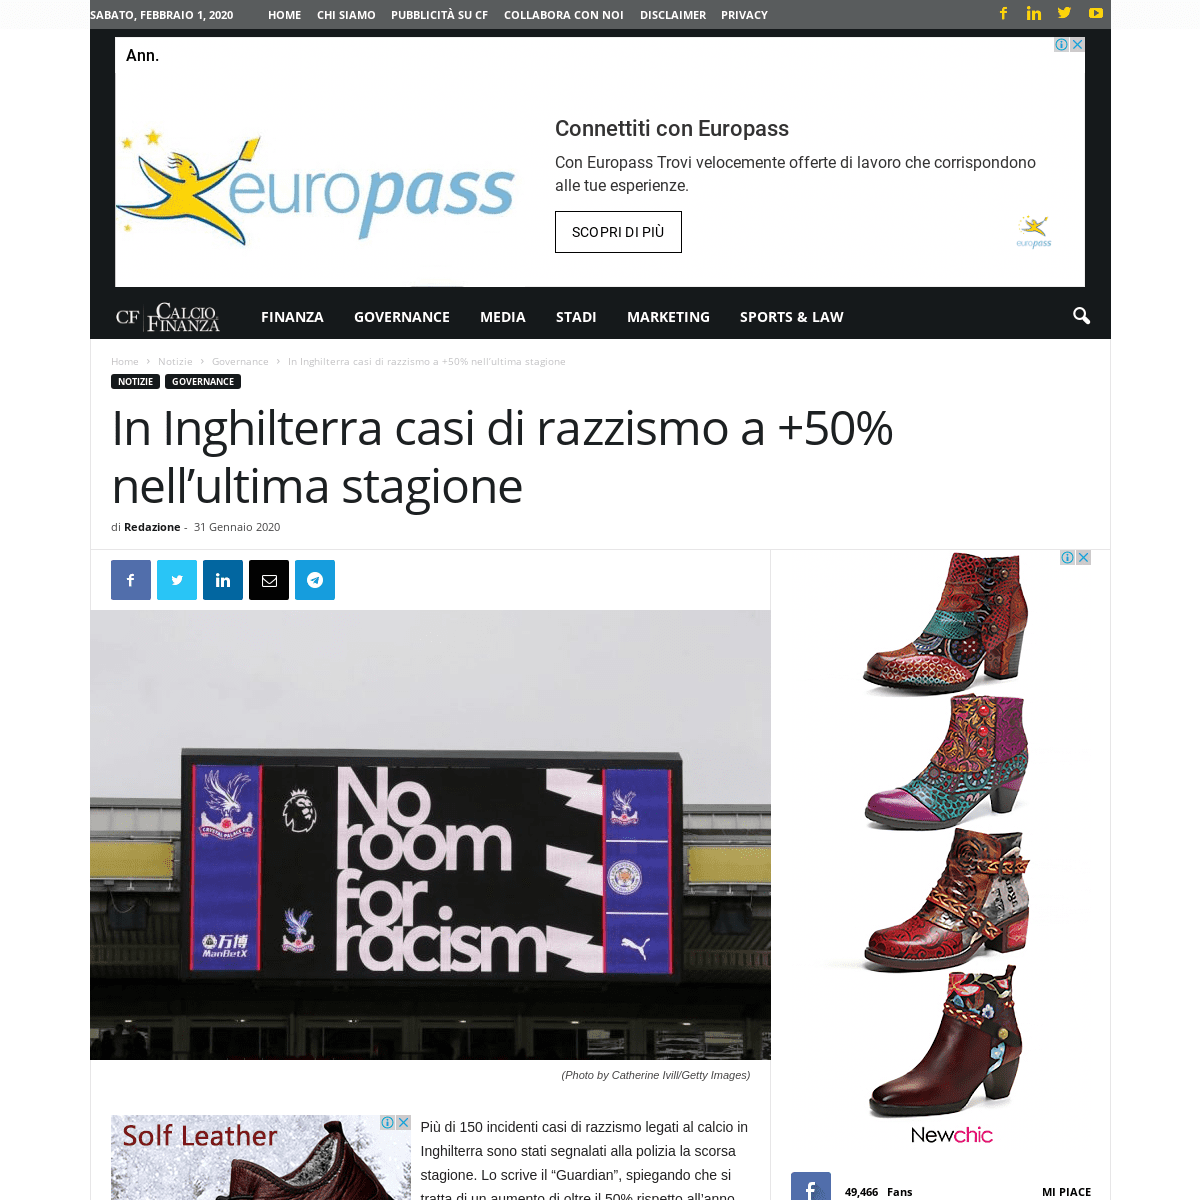 A complete backup of www.calcioefinanza.it/2020/01/31/inghilterra-casi-razzismo/